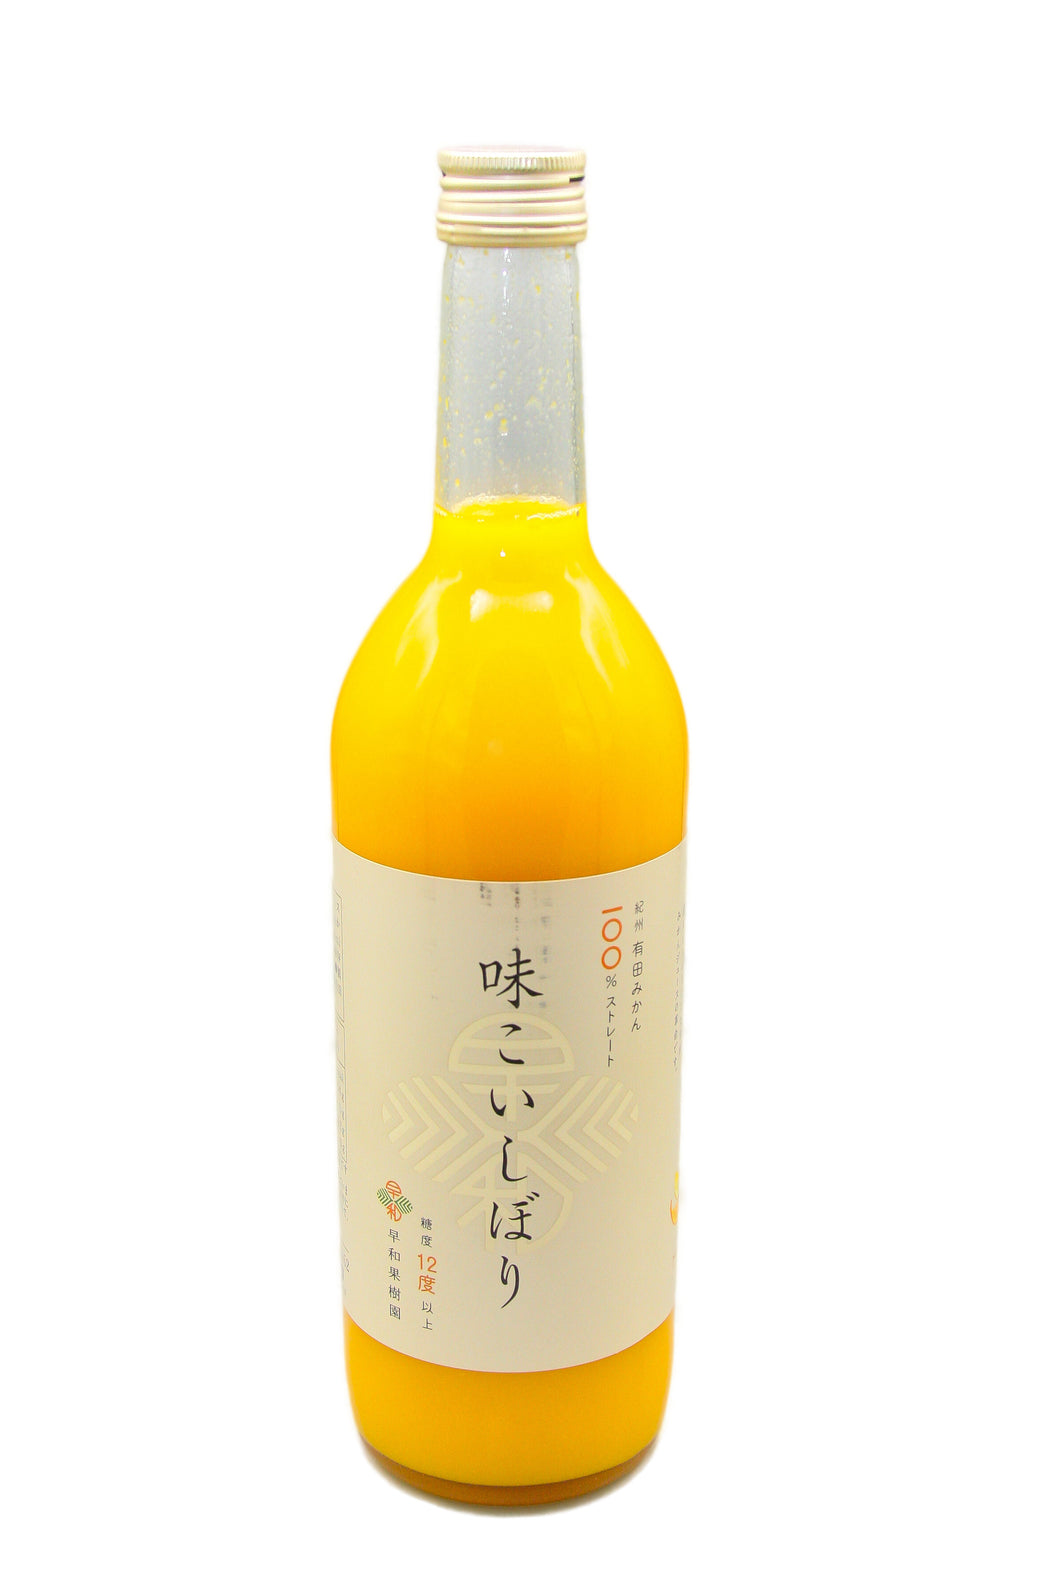 Japanischer Mikan Mandarinensaft 12 Brix